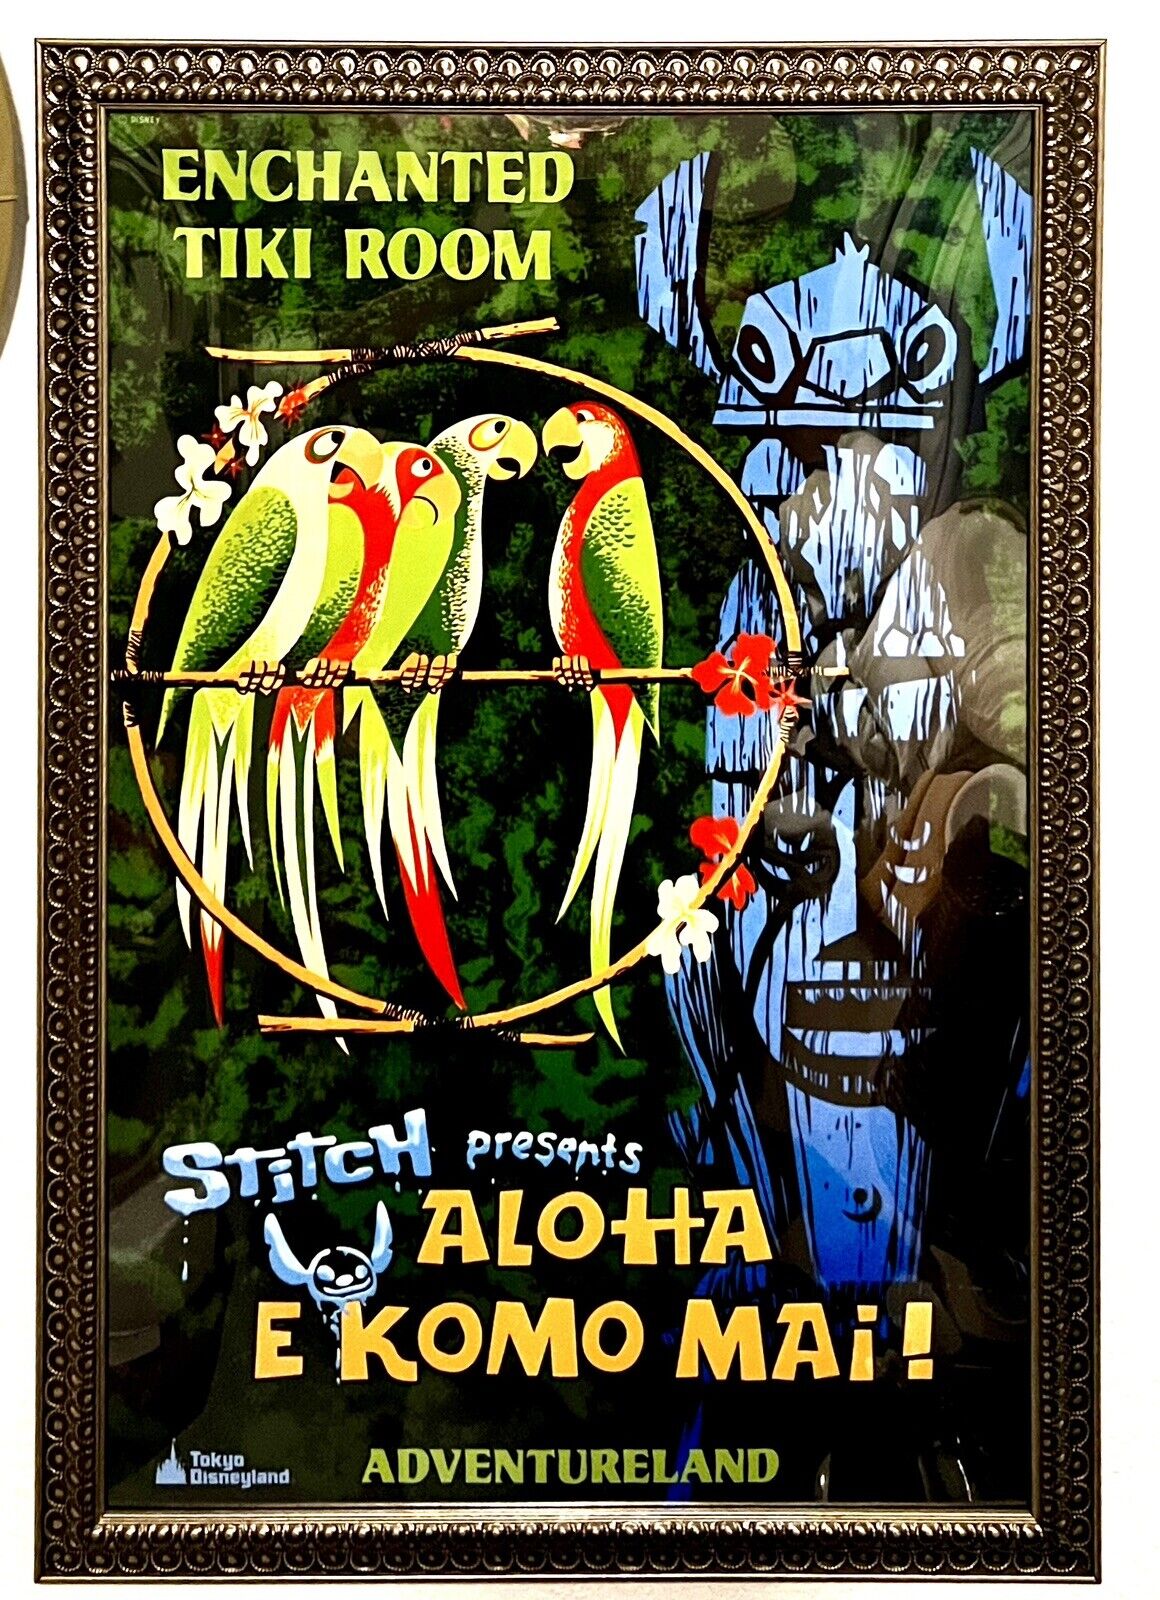 36x54 Poster Tokyo Disneyland Enchanted Tiki Room Lilo & Stitch Aloha E Komo Mai